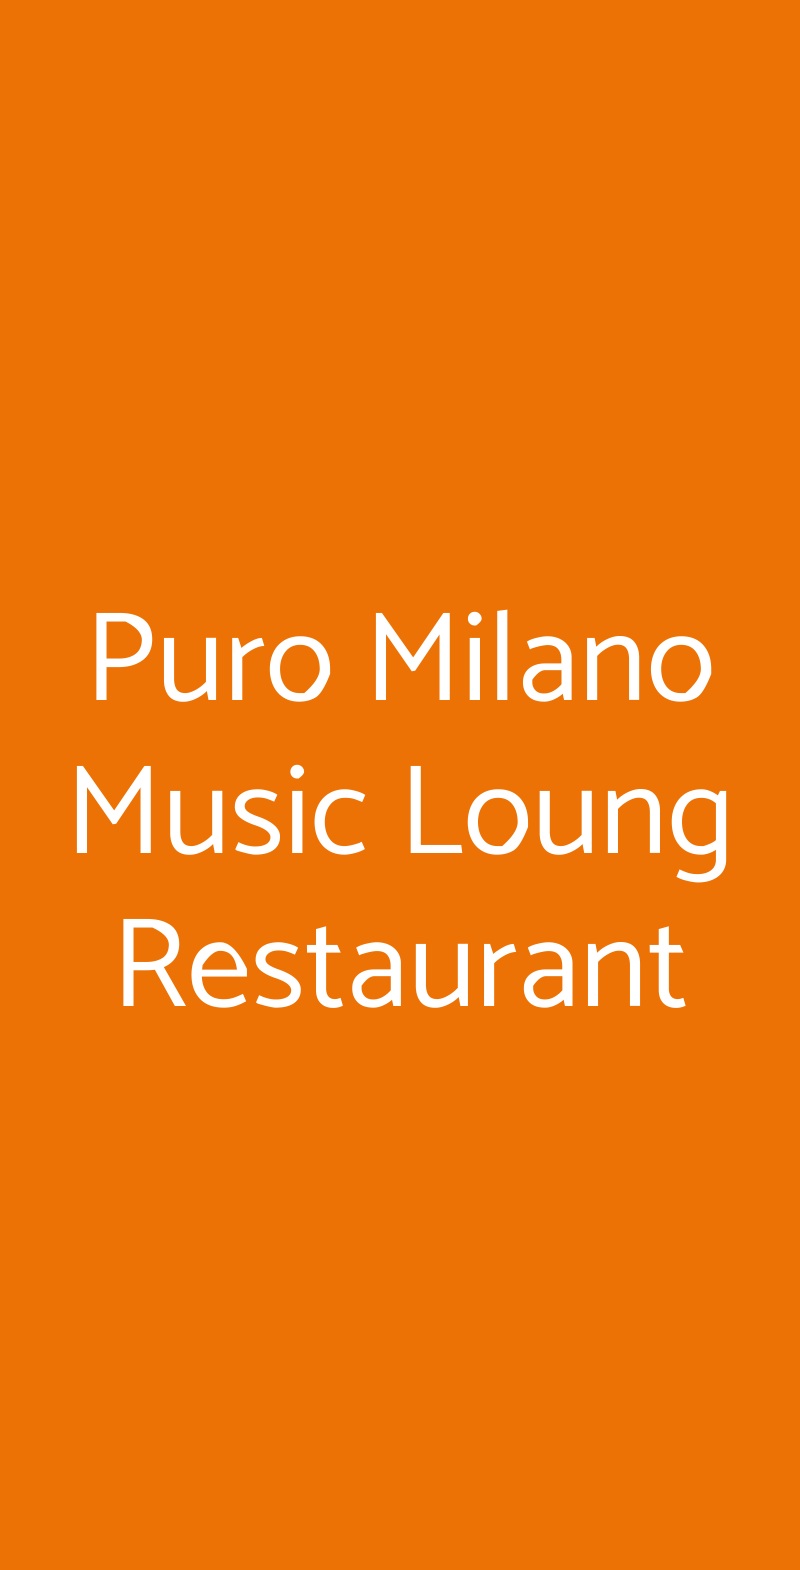 Puro Milano Music Loung Restaurant Milano menù 1 pagina